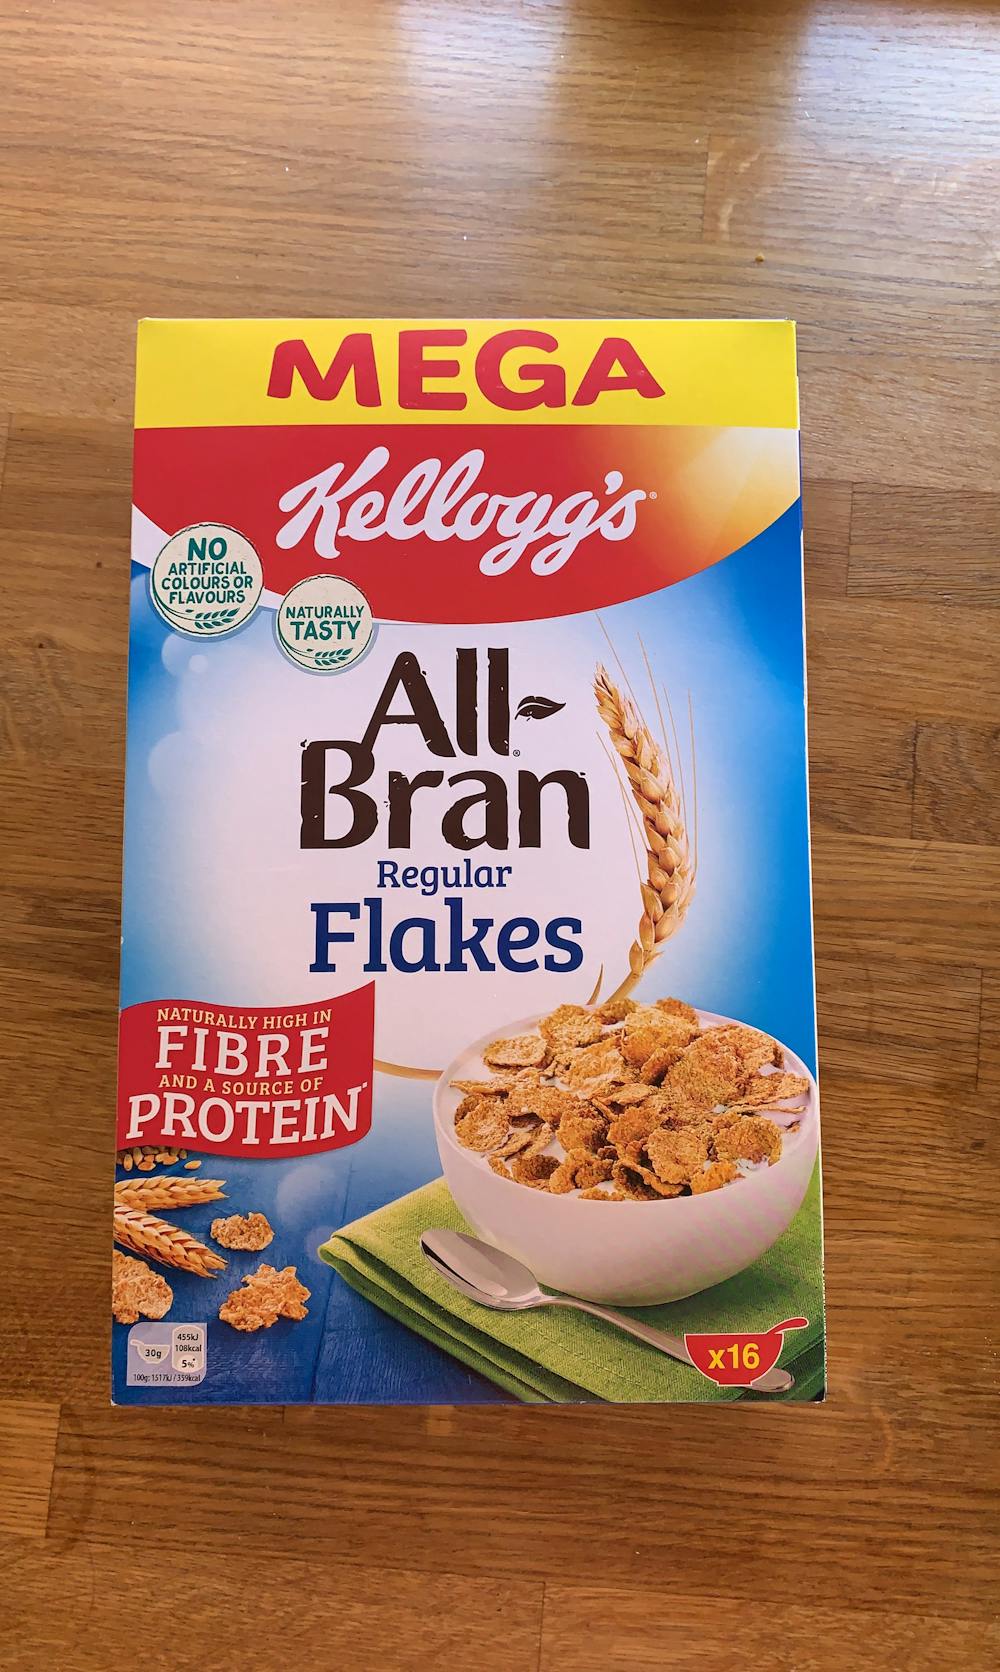 All-Bran regular flakes, Kelloggs